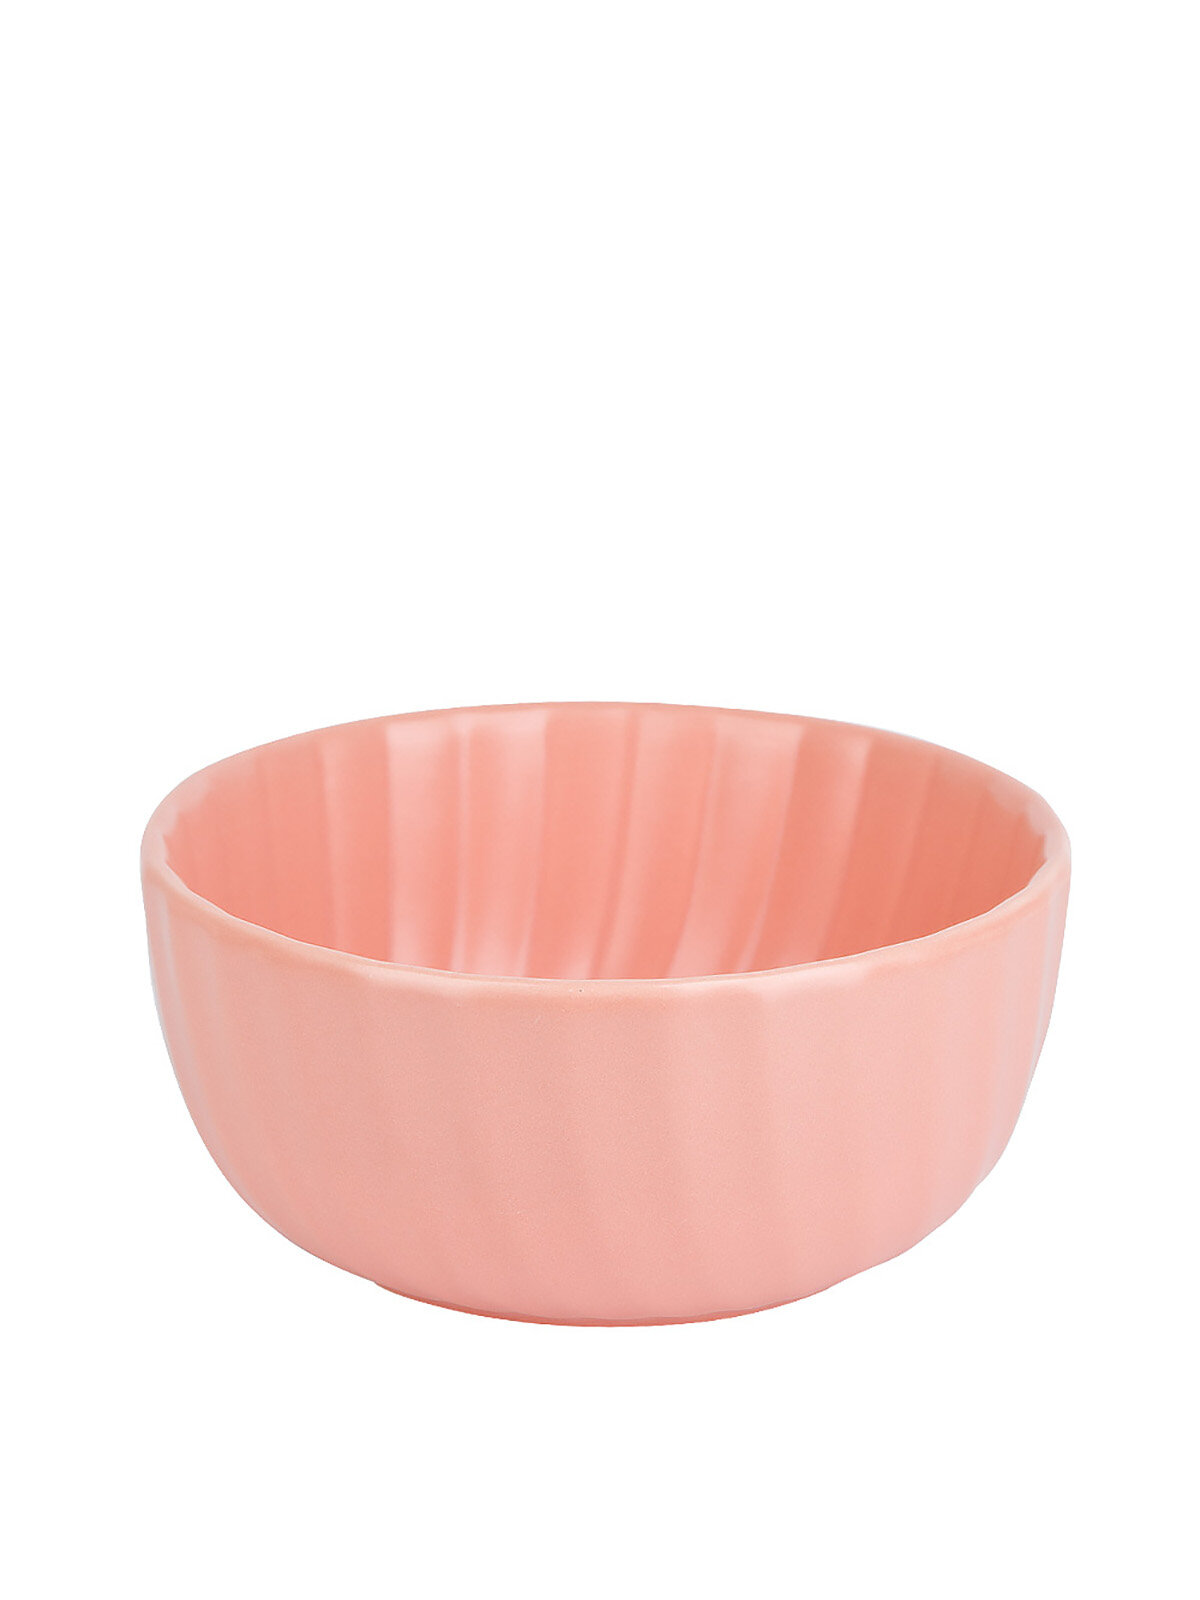 Салатник Nouvelle "Fresh Taste Pink", фарфоровый, 11,5x11,5x5,8 см, 350 мл